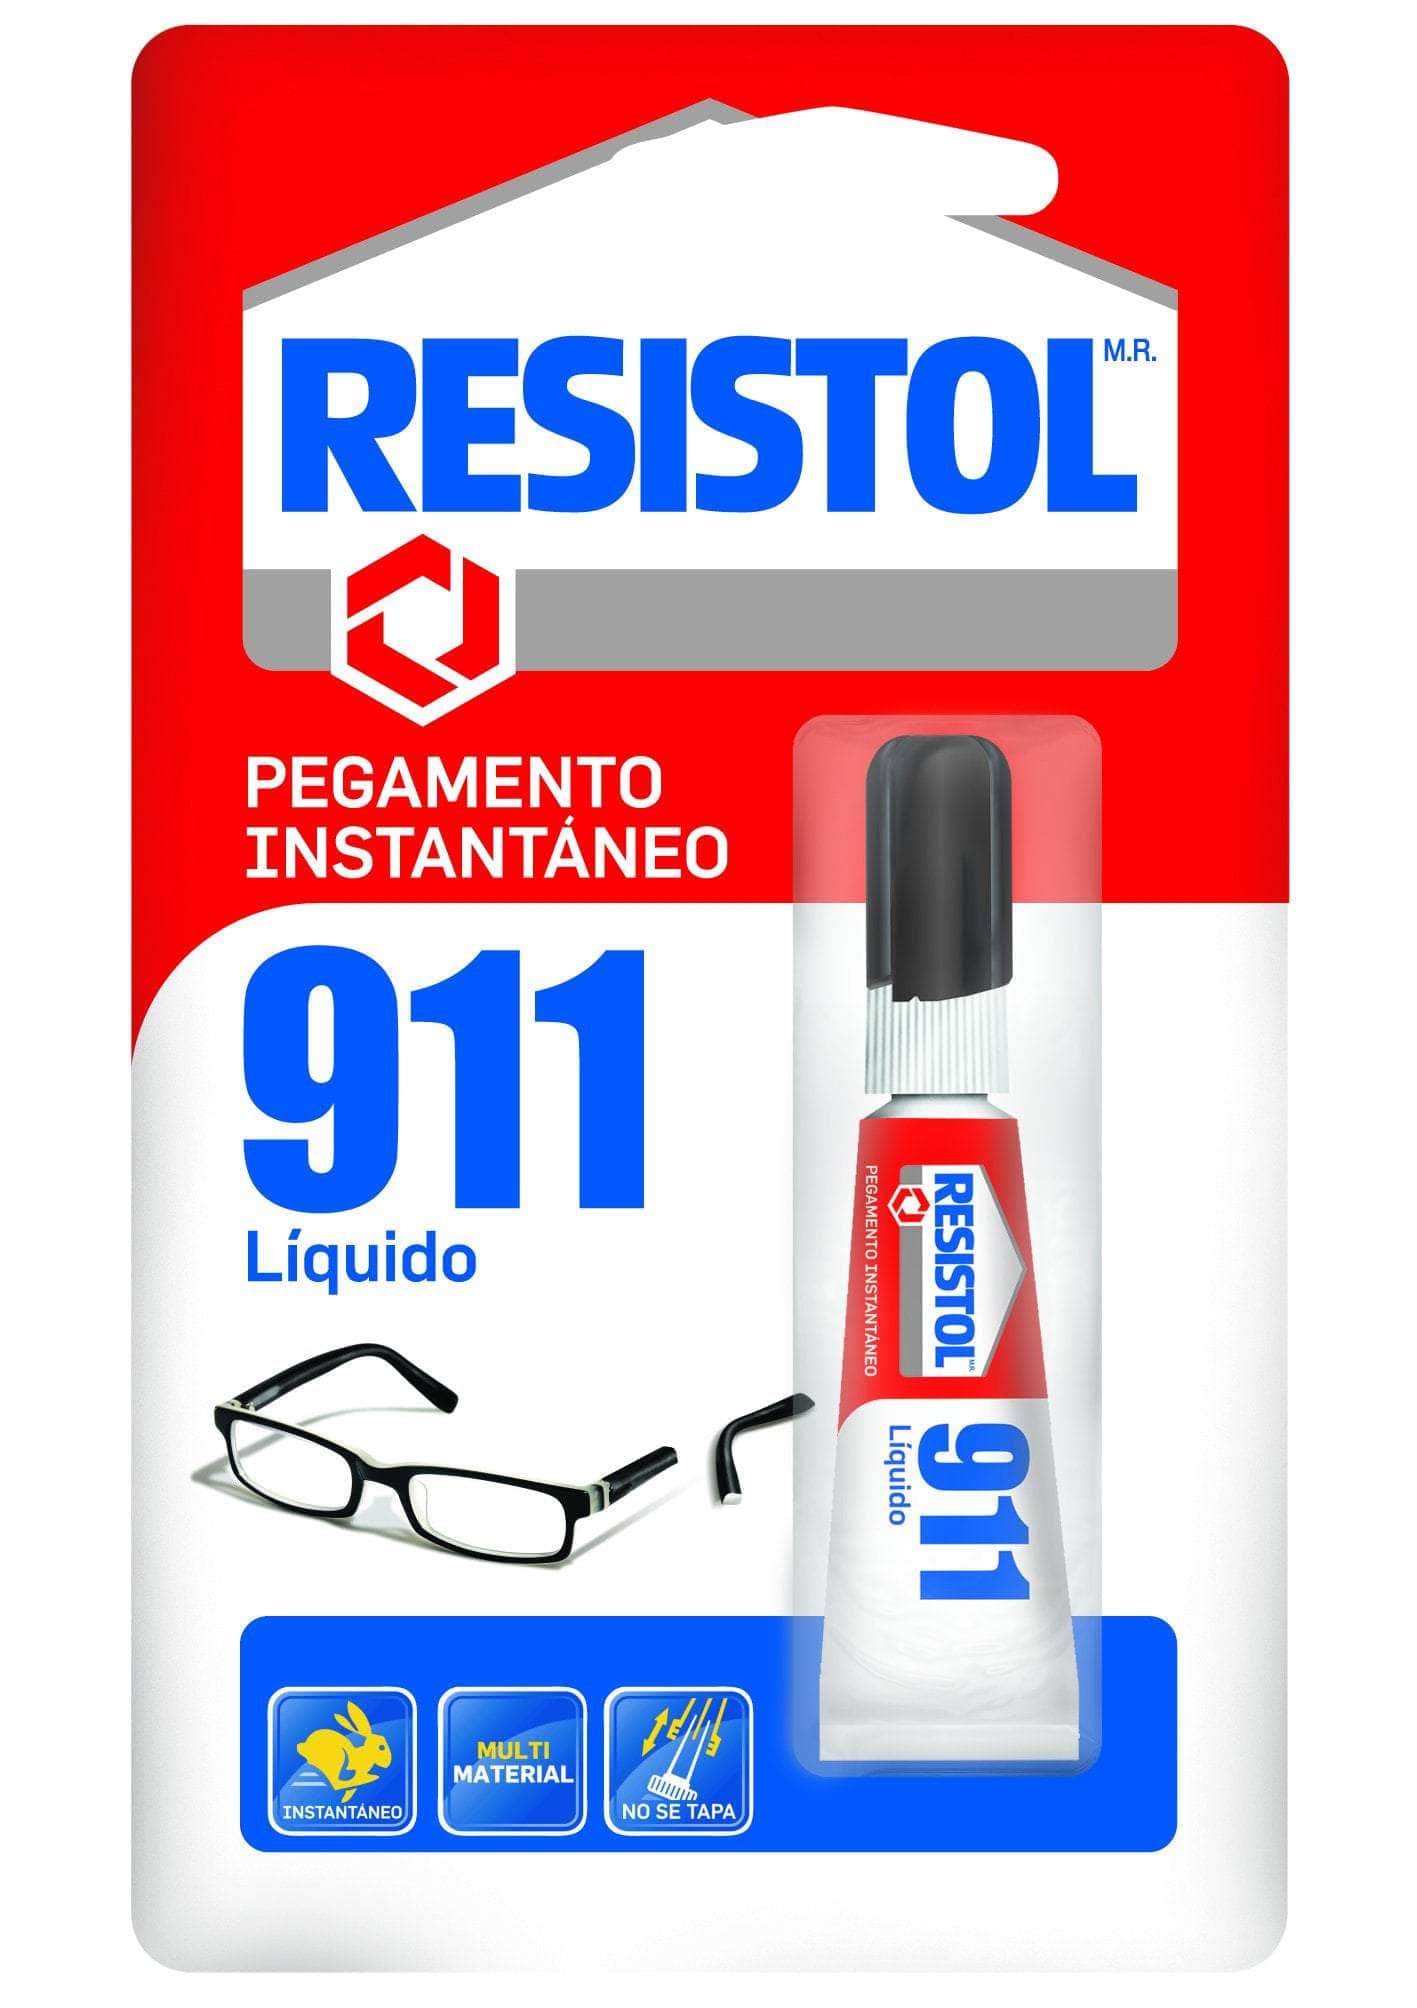 H0130 Resistol 911 Liquido, tubo de 2grs RESISTOL